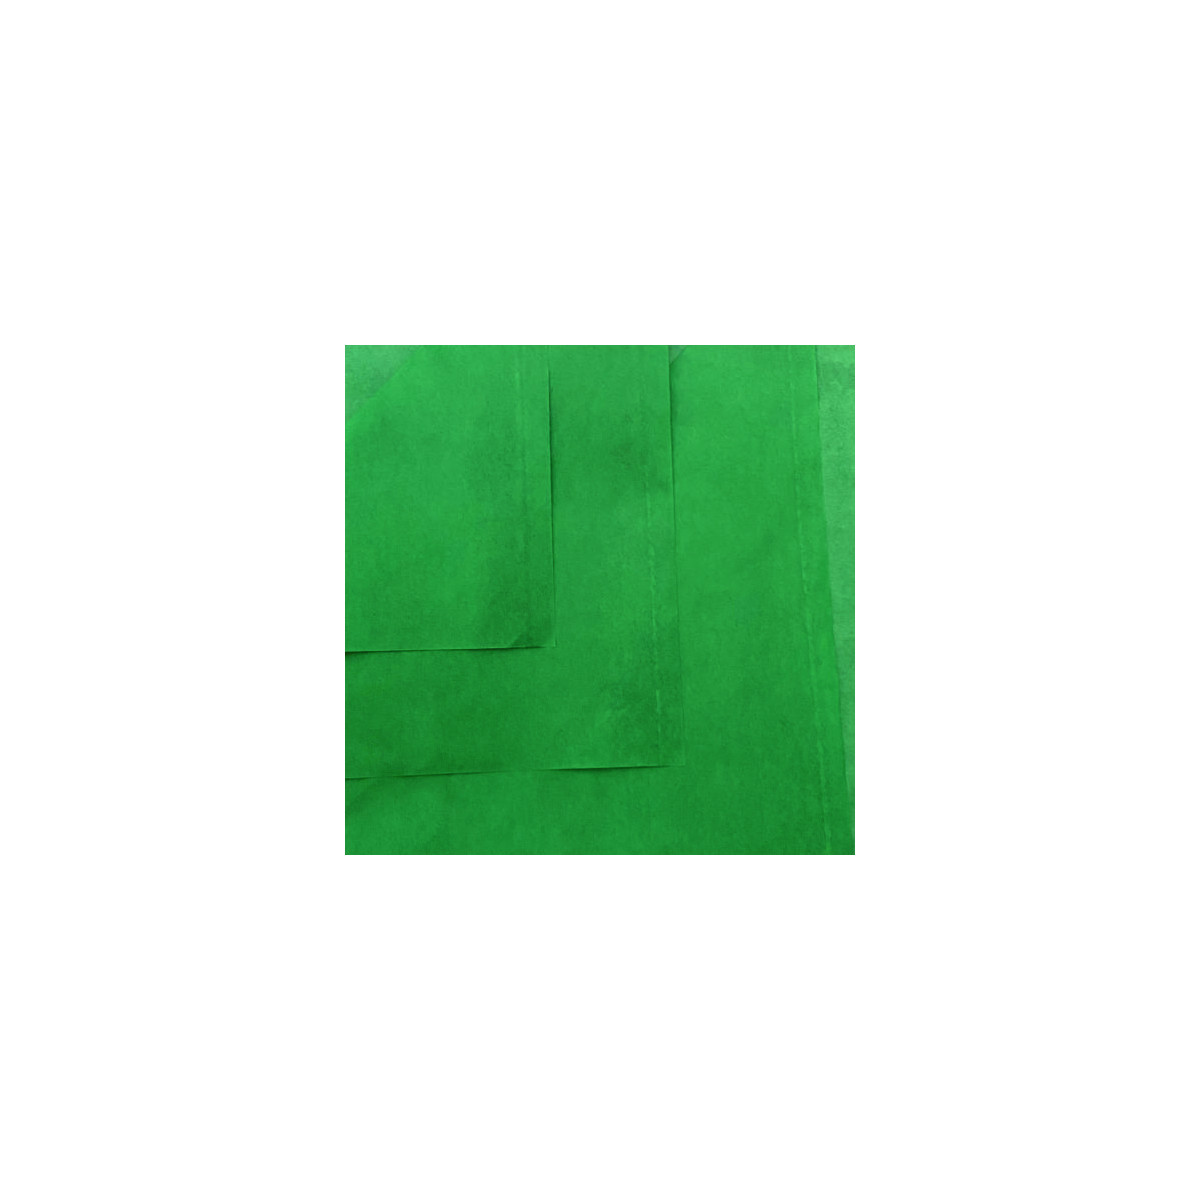 Green Cardboard Sheet  Cardboard Sheets 30x20